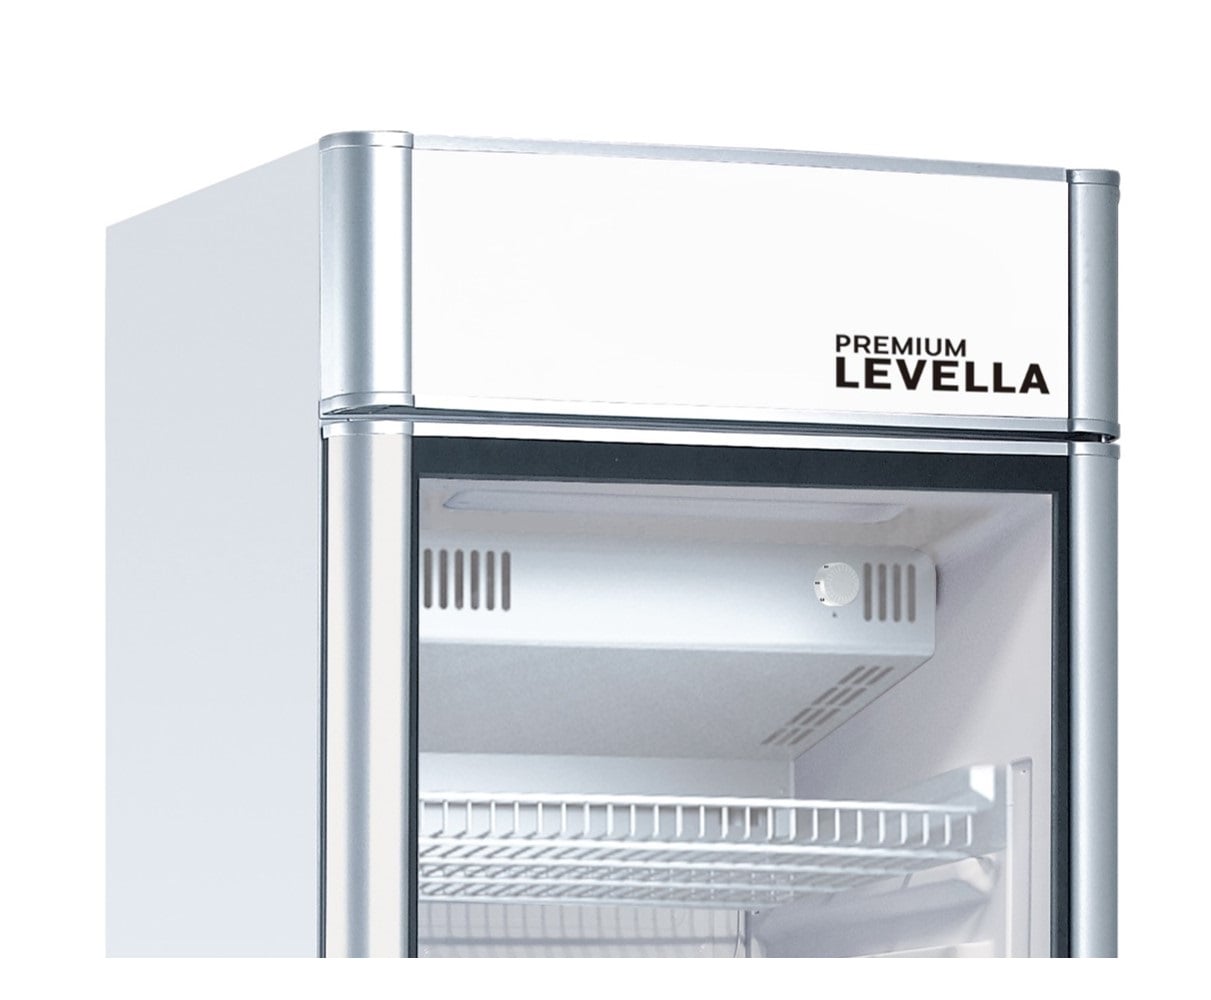 Premium Levella - 29 Cu. ft. 2-Door Commercial Refrigerator with Glass Display